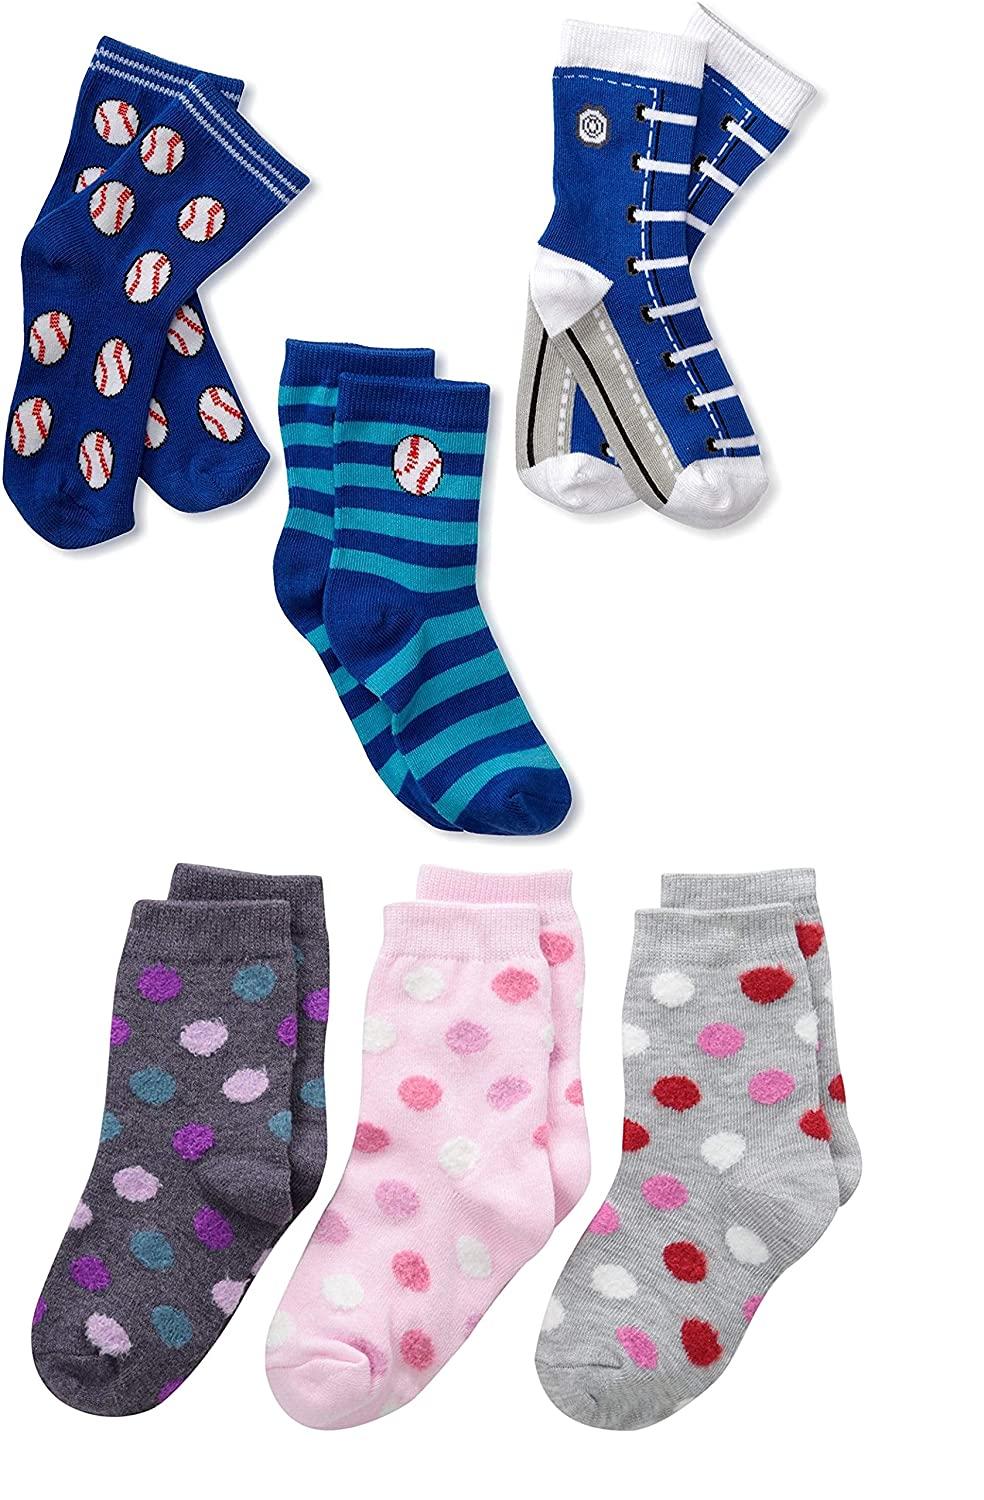 FOOTPRINTS Organic cotton Baby Socks-12-30 Months - Pack of 6 Pairs -BlueBaseball and Big dot